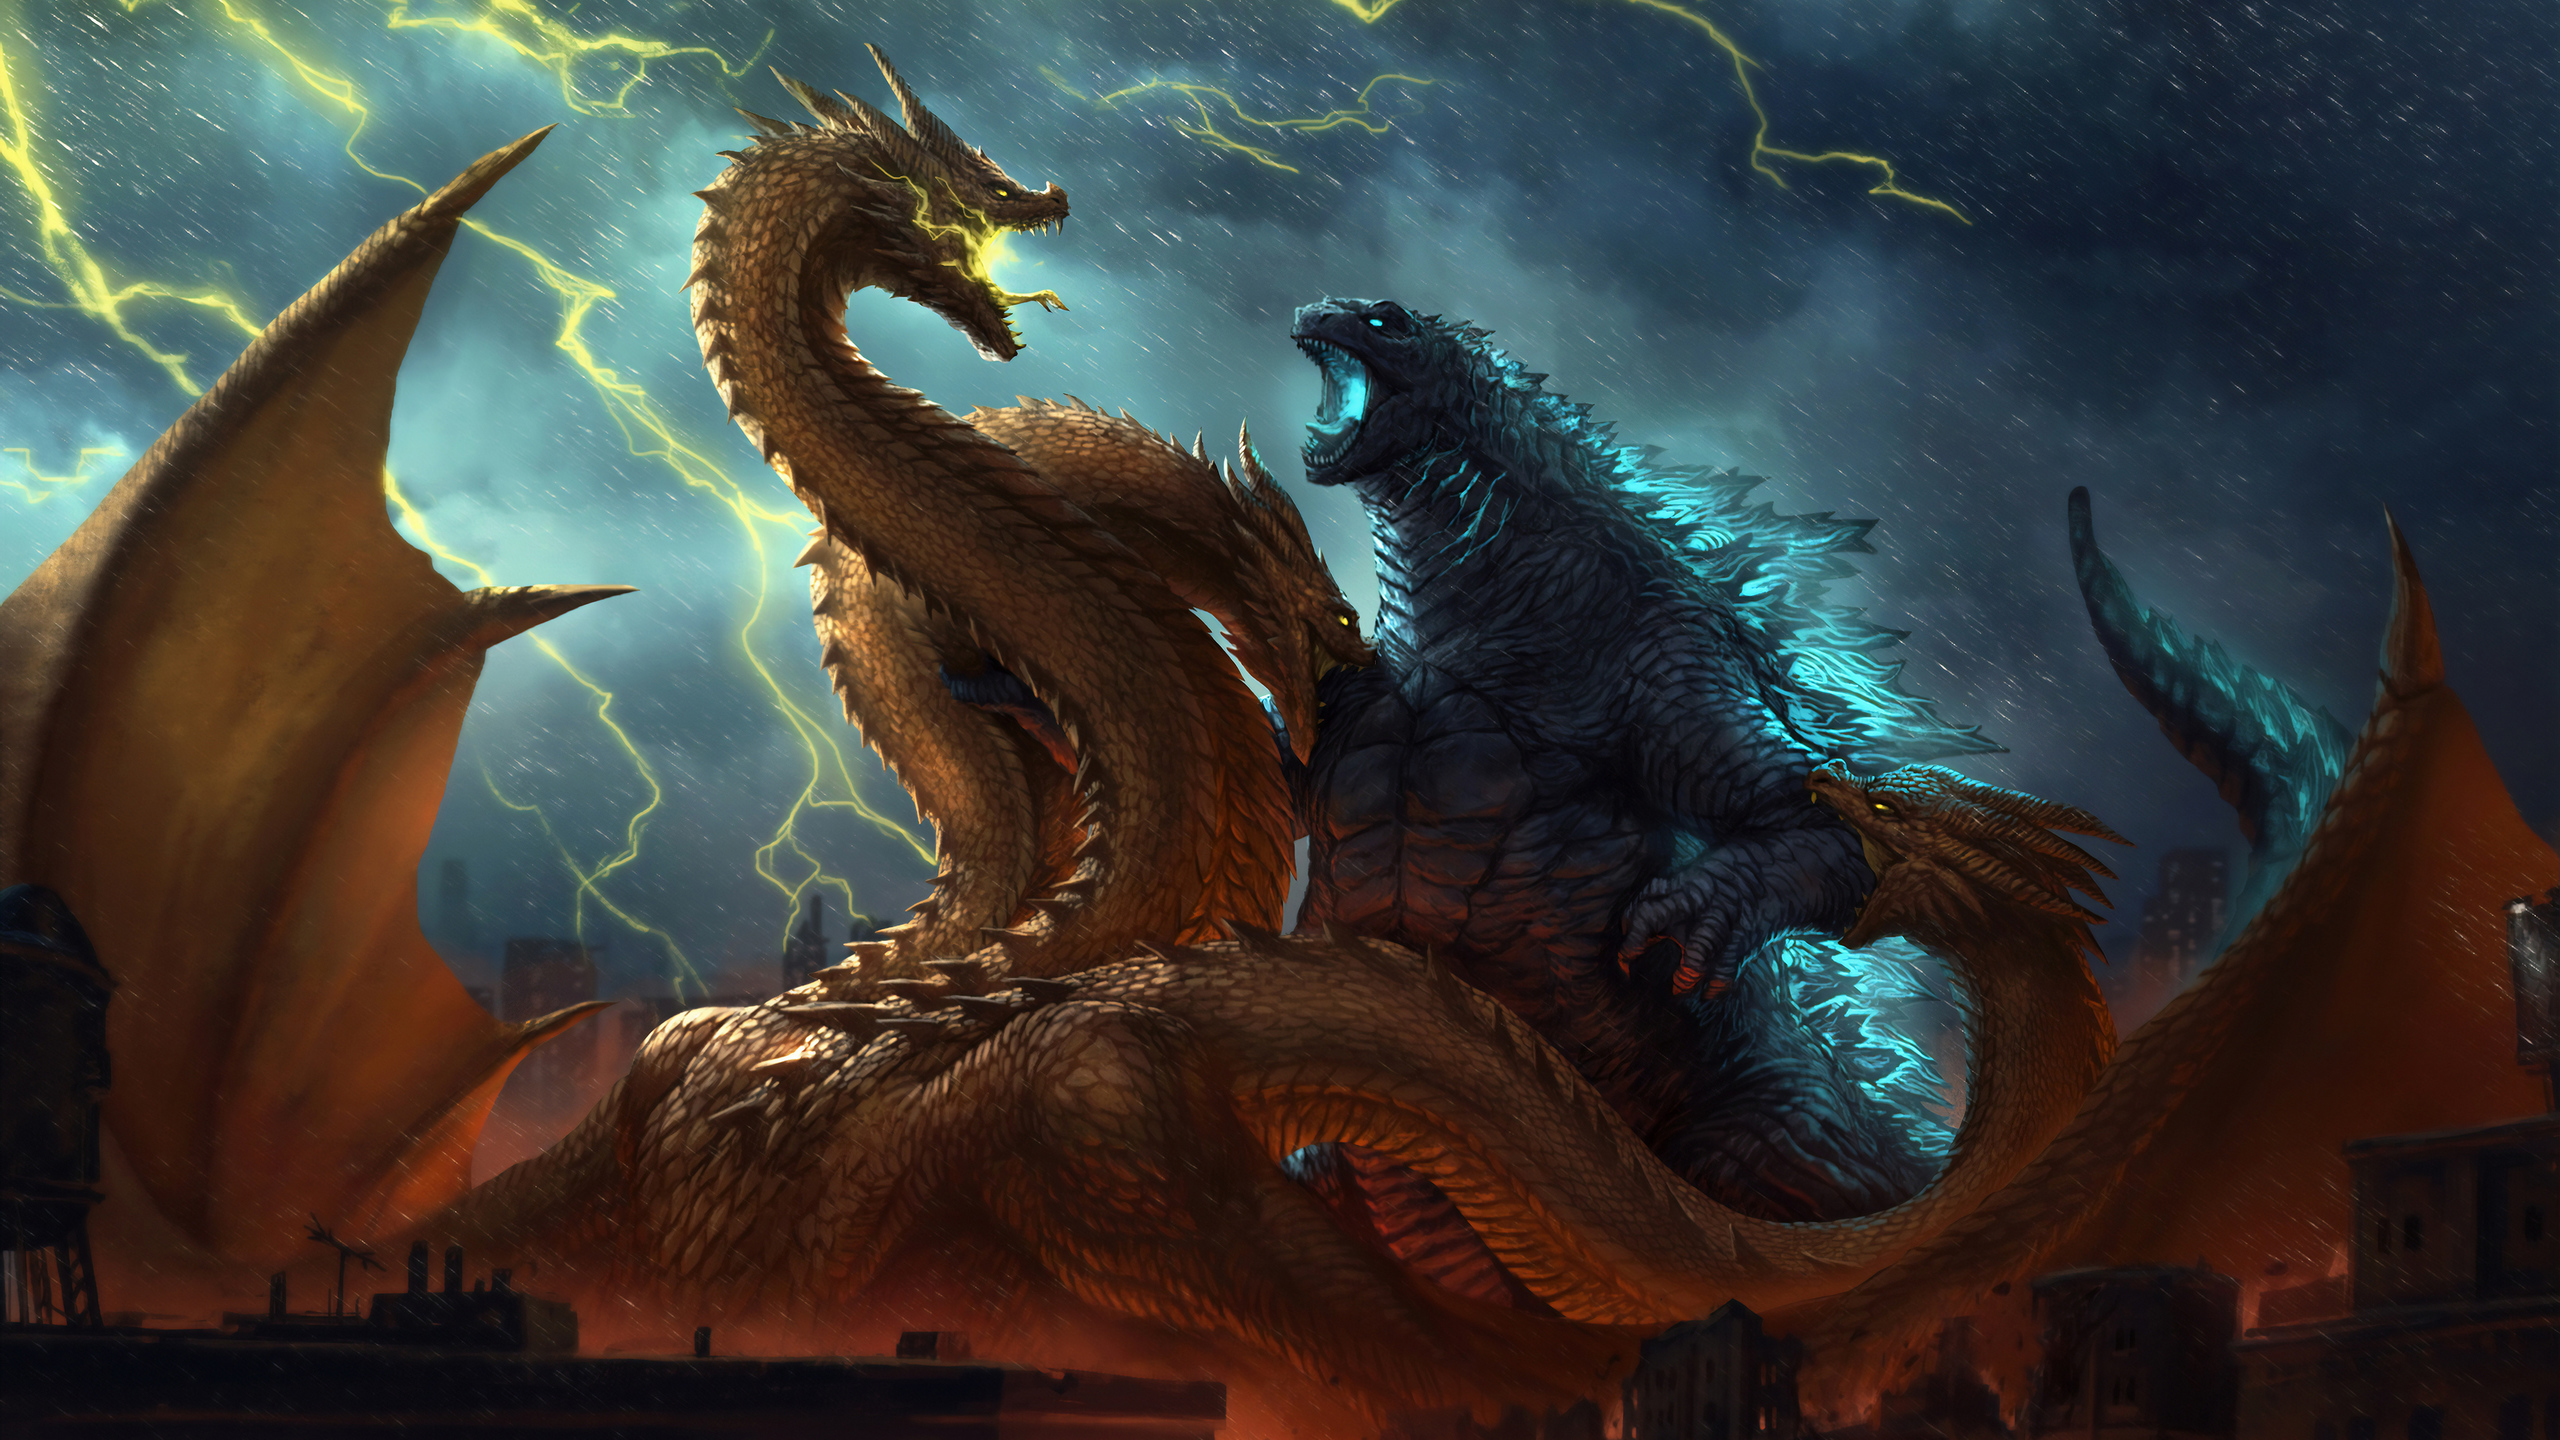 Digital Digital Art Artwork Godzilla Godzilla King Of The Monsters City Battle Creature King Ghidora 2560x1440